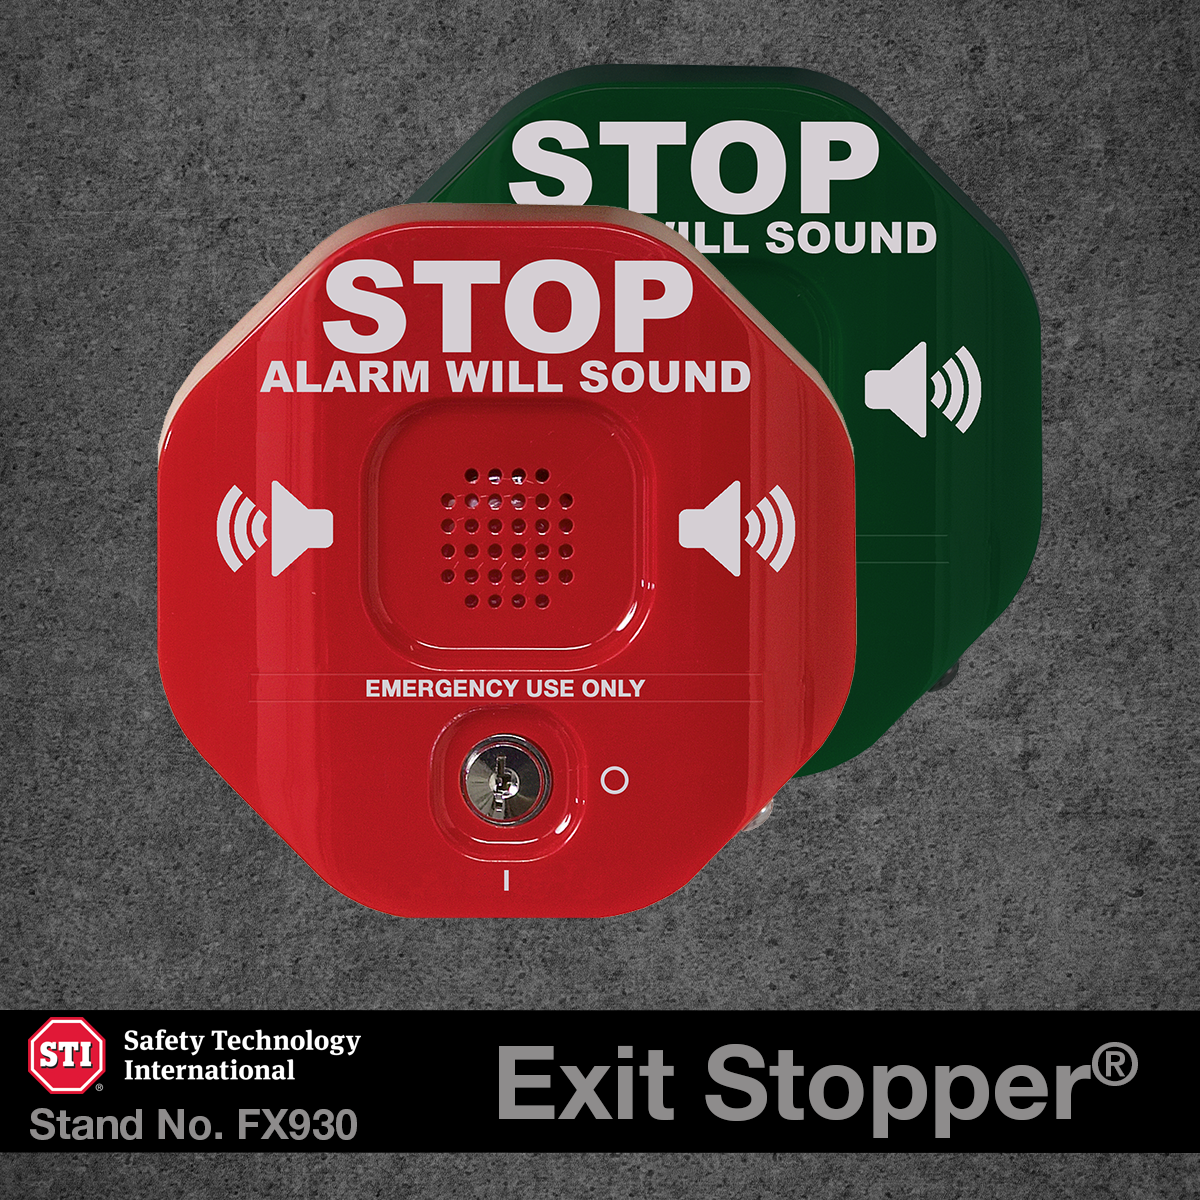 STI-6400 Exit Stopper ®